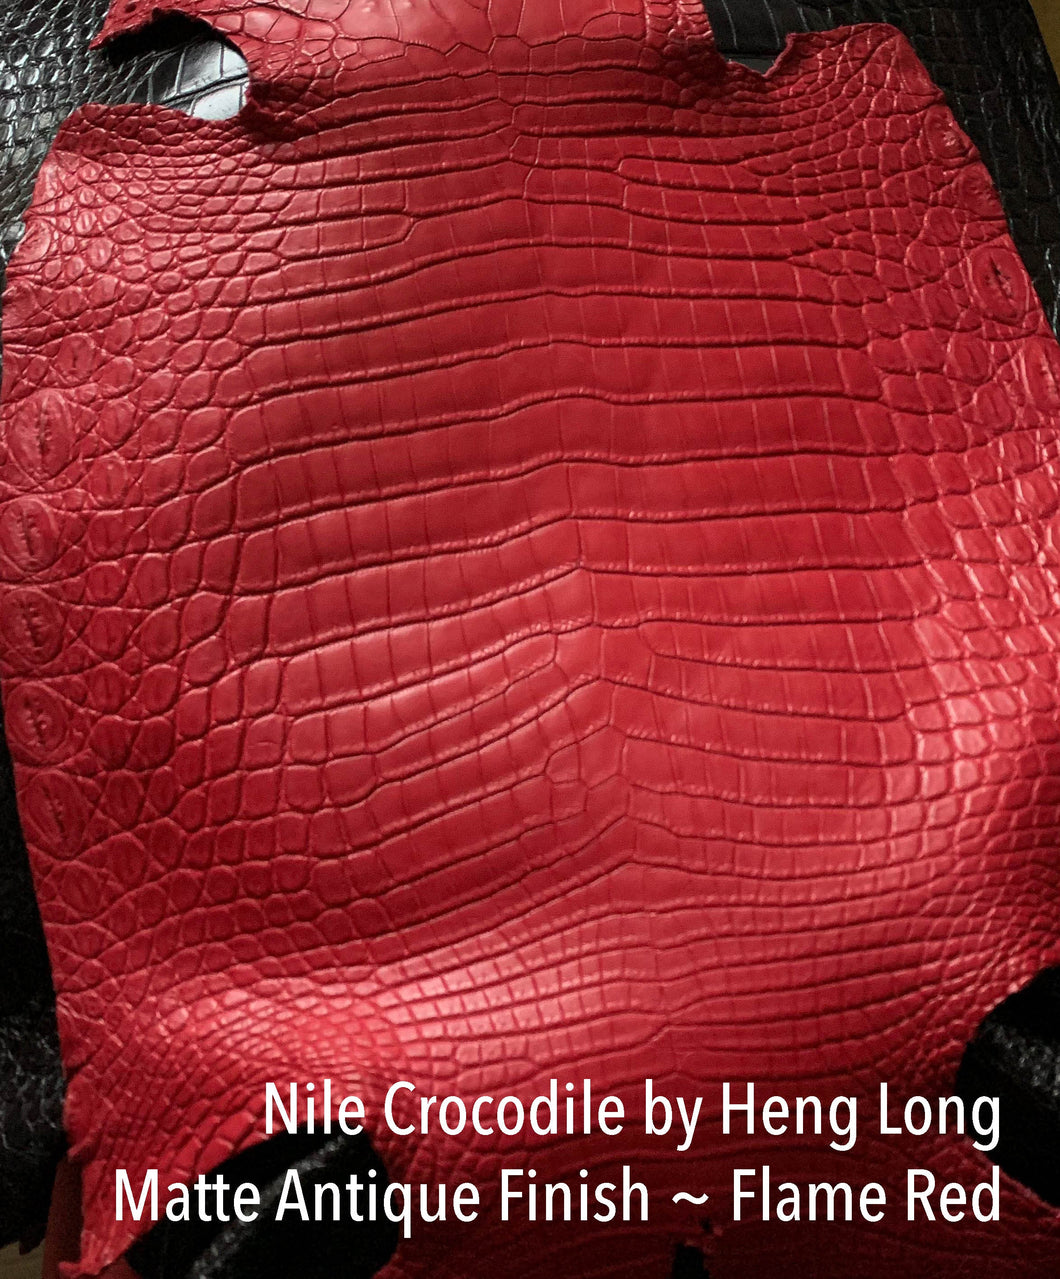 Crocodile Nile Matte Antique Flame Red